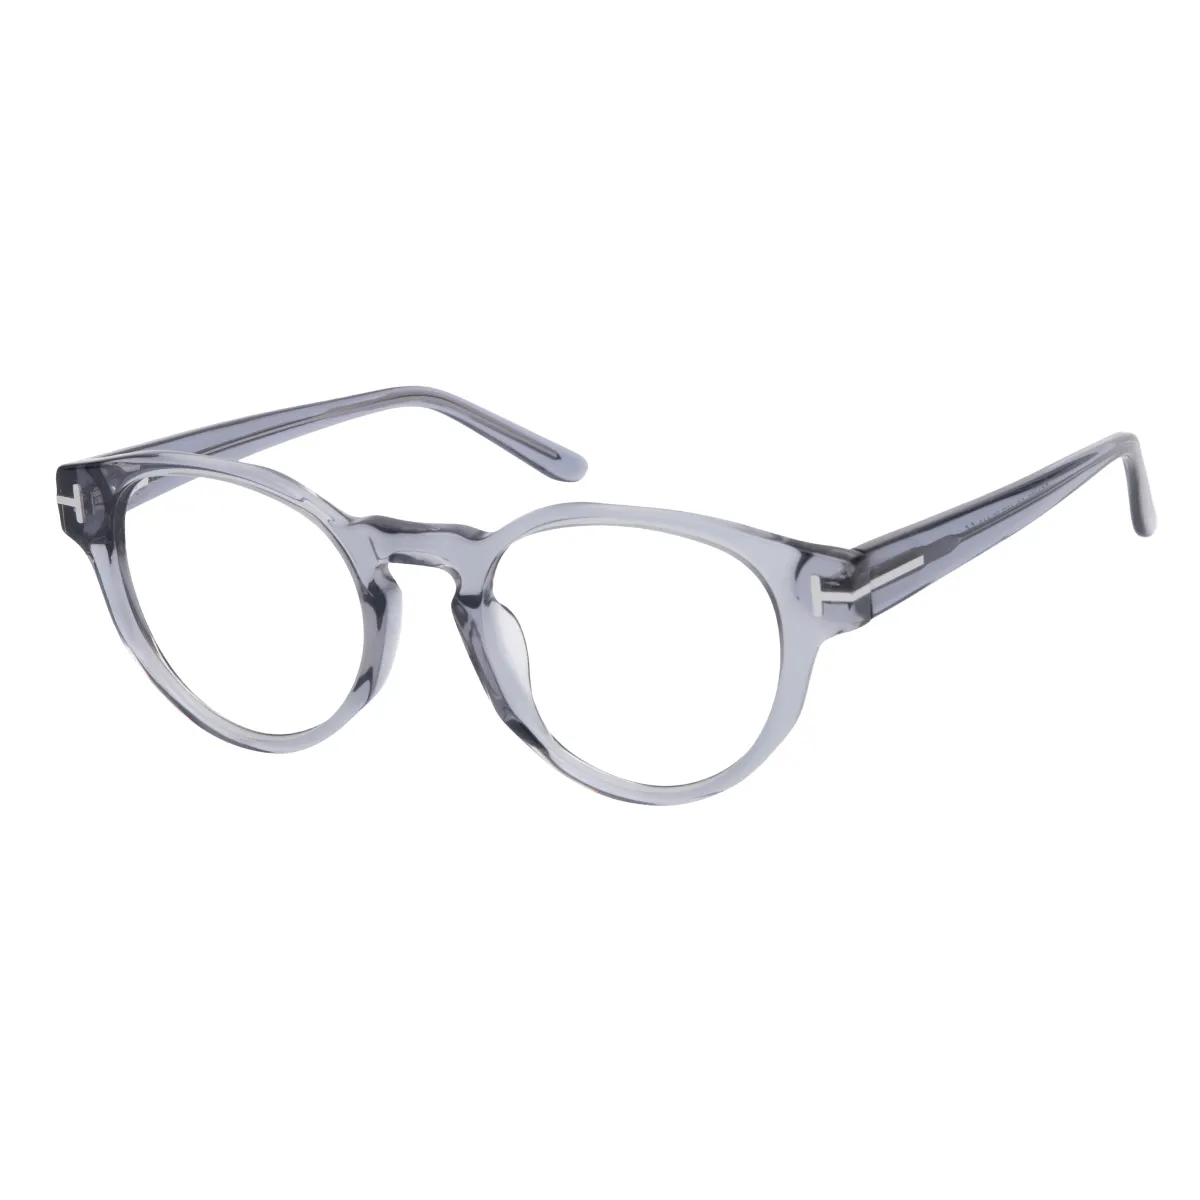 Reina - Round Transparent-Gray Glasses for Women